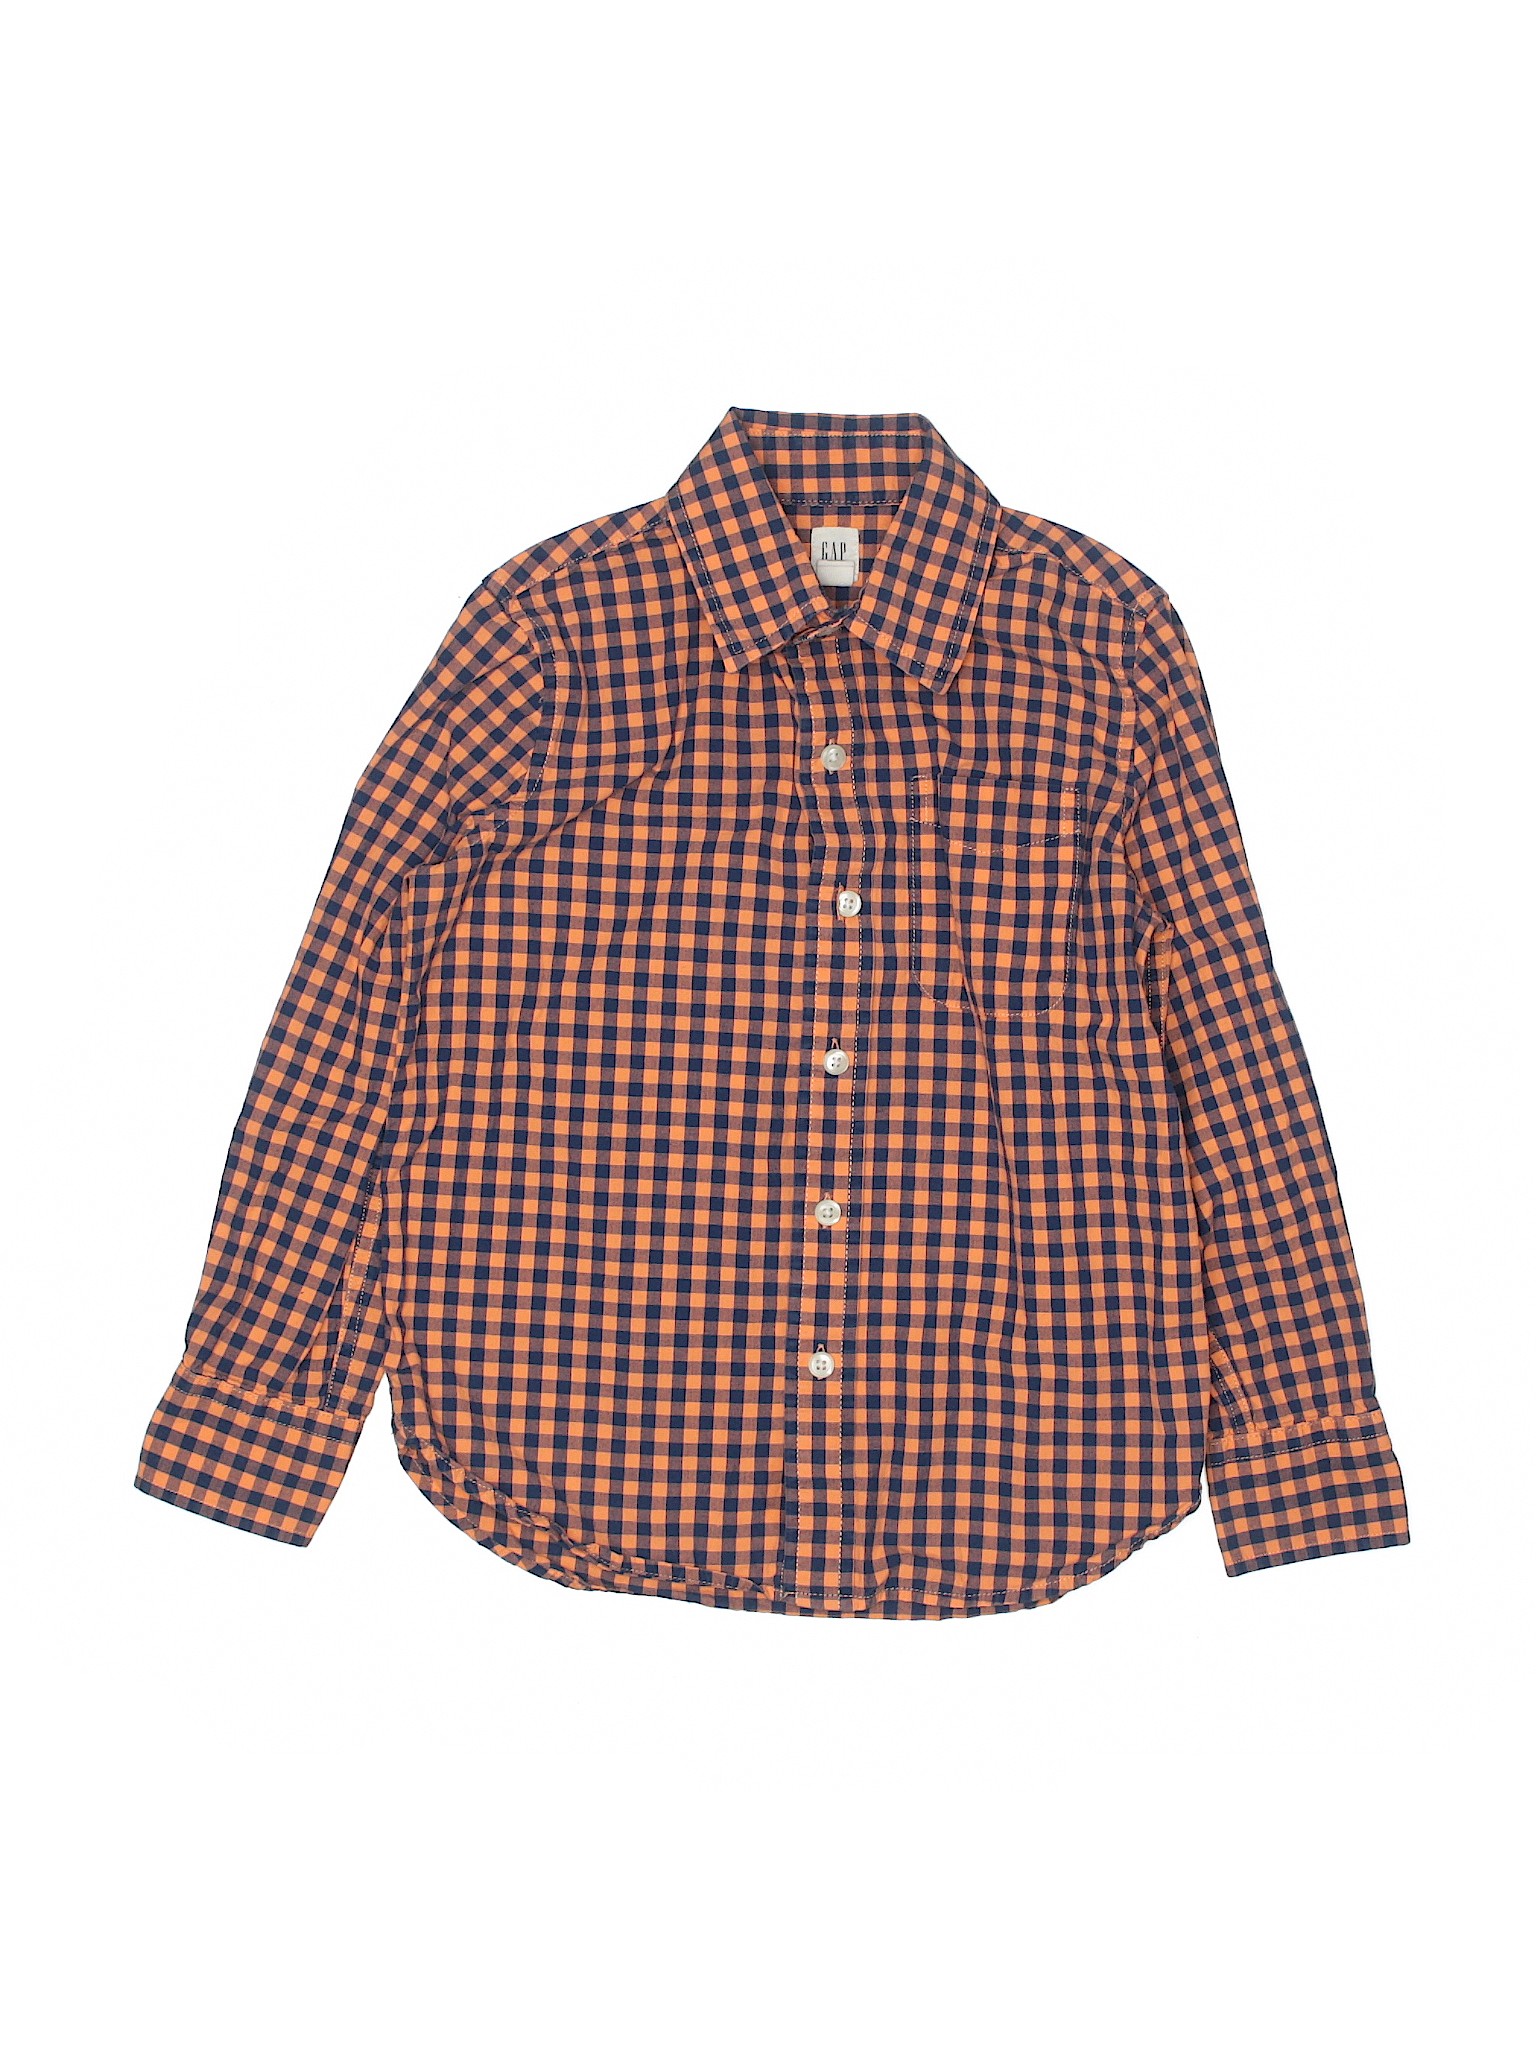 Gap Kids Boys Orange Long Sleeve Button-Down Shirt 6 | eBay